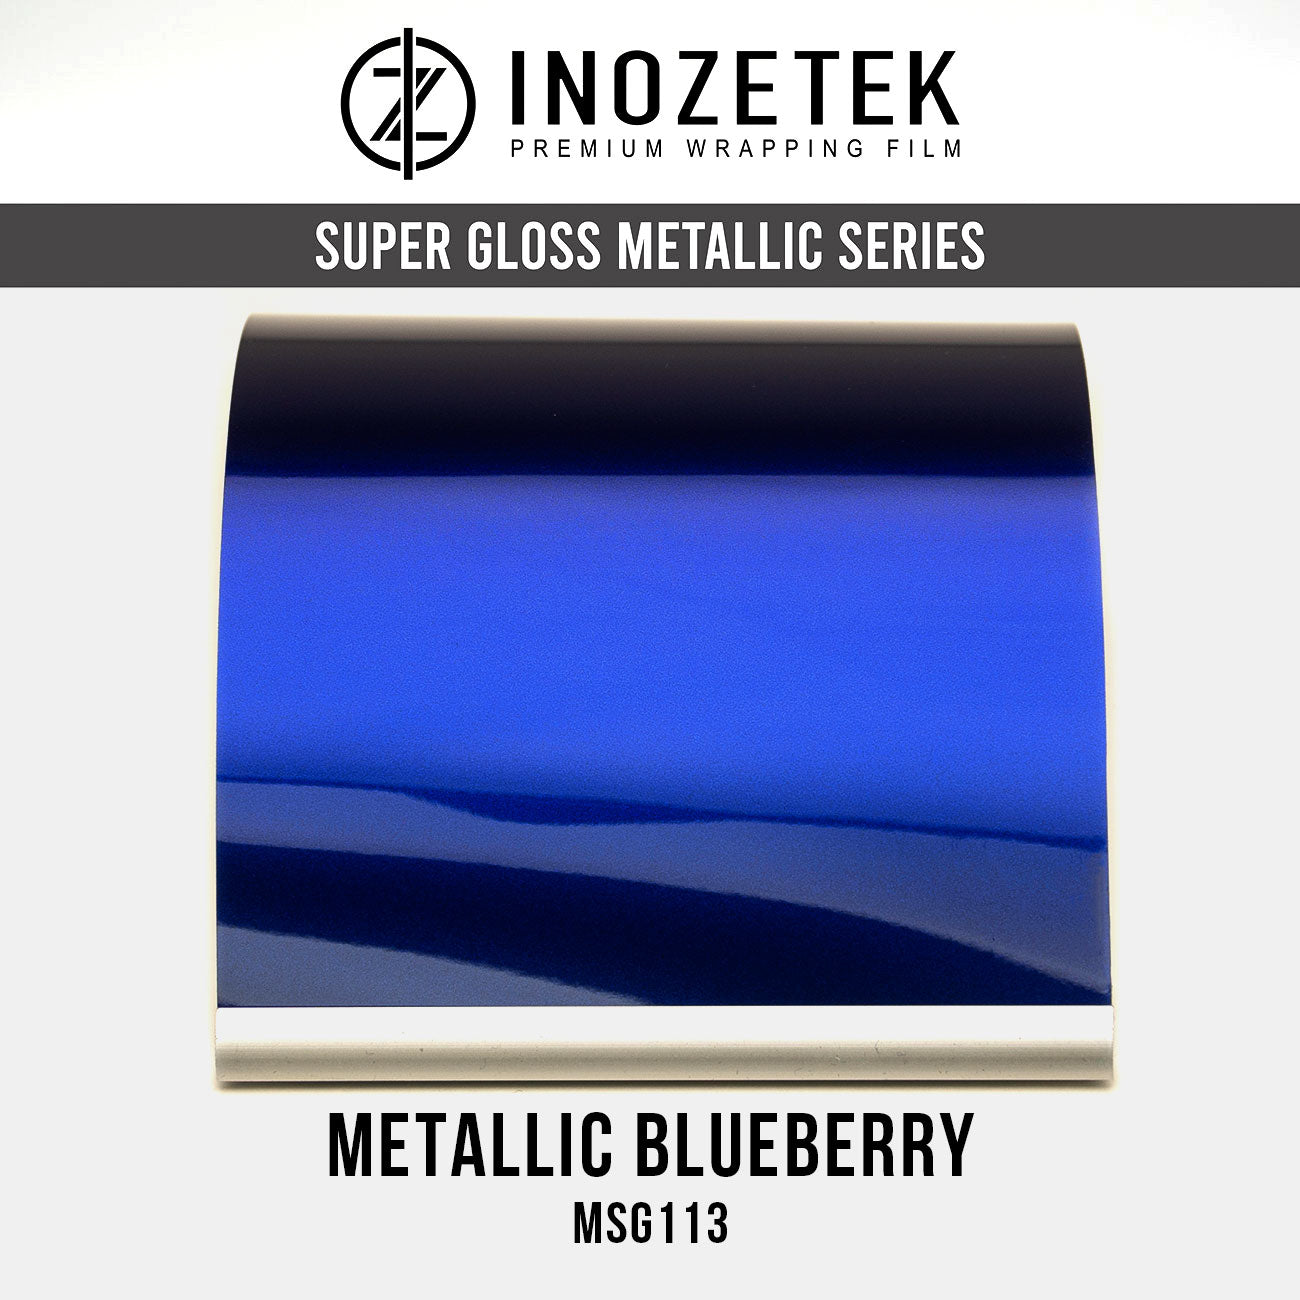 Super Gloss Metallic Blueberry